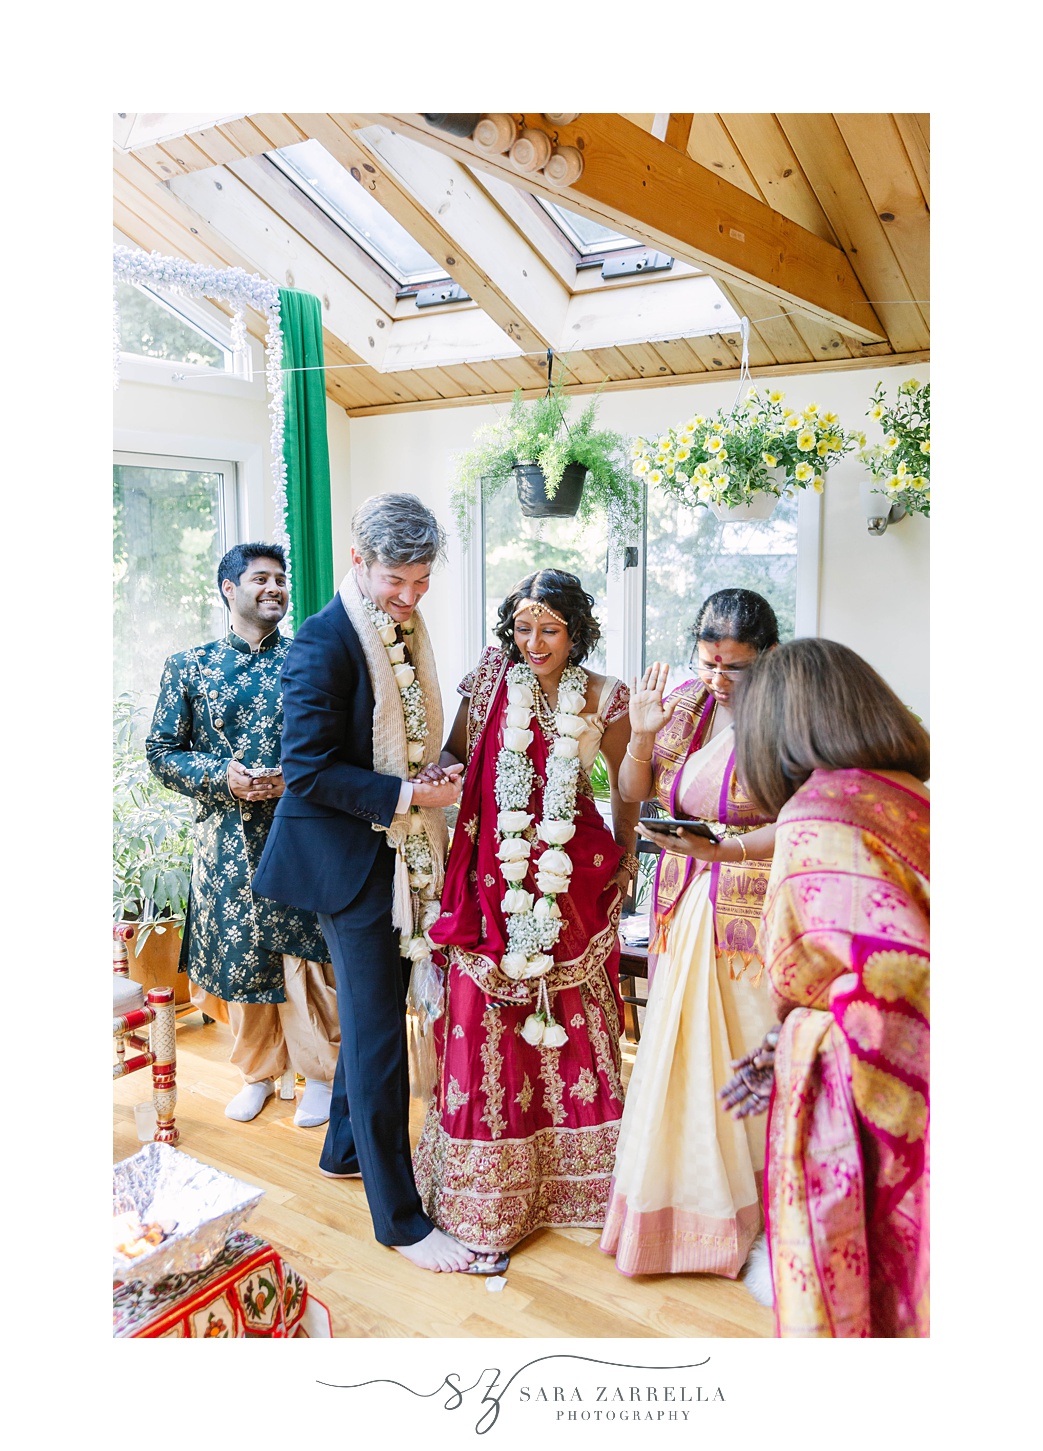 newlyweds walk circle during intimate Hindu wedding ceremony at home